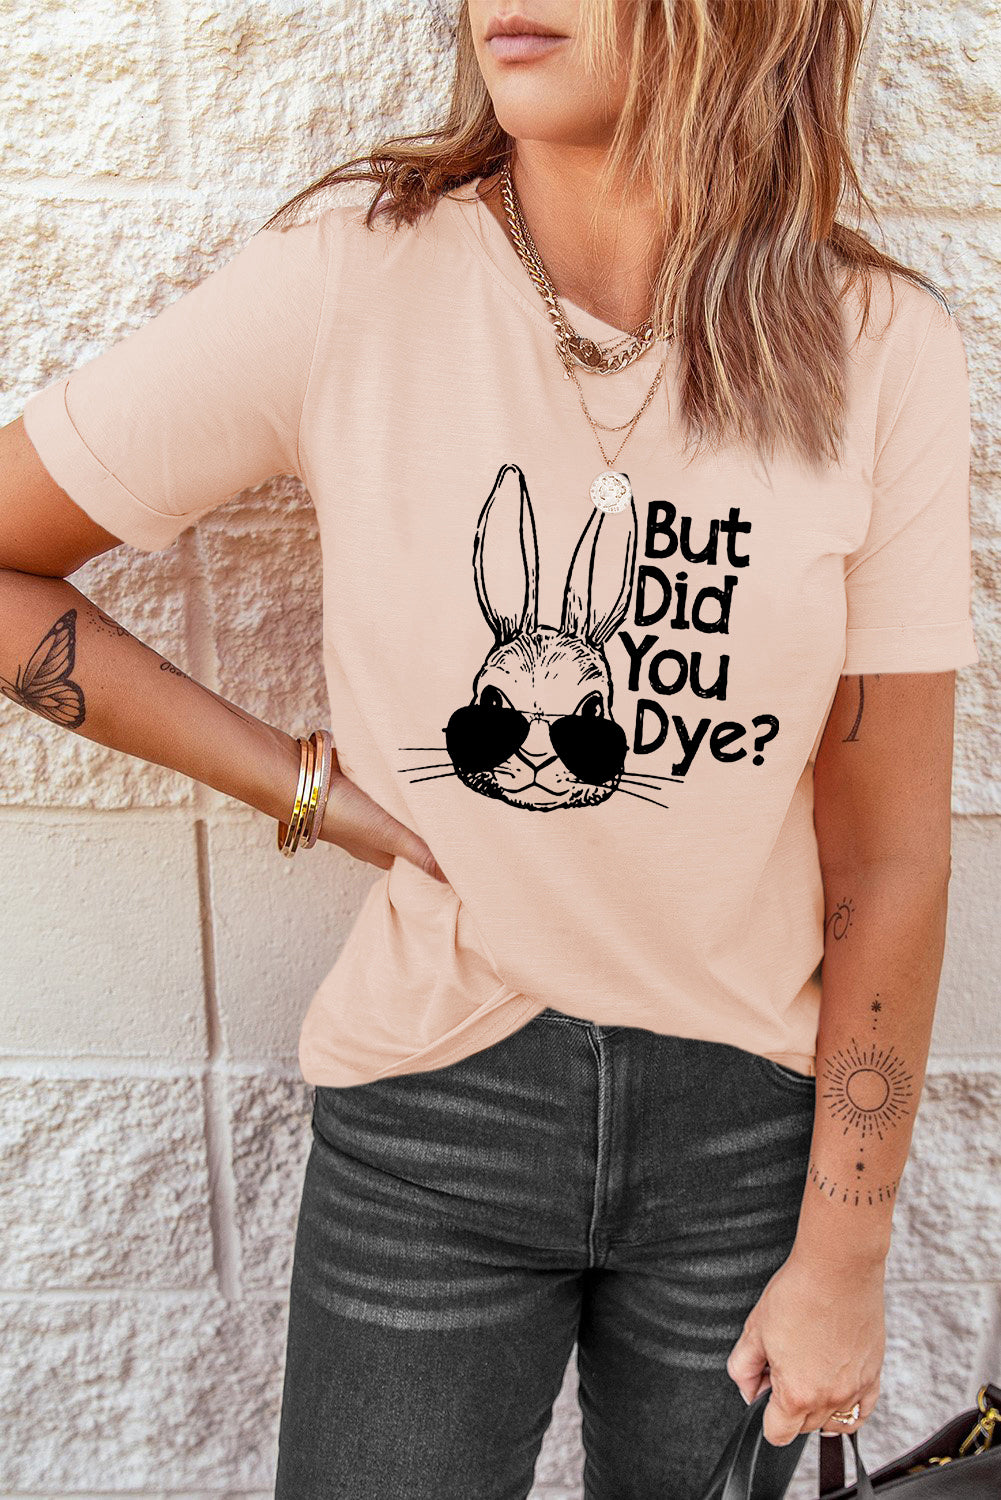 Easter Rabbit Graphic Round Neck Tee Shirt